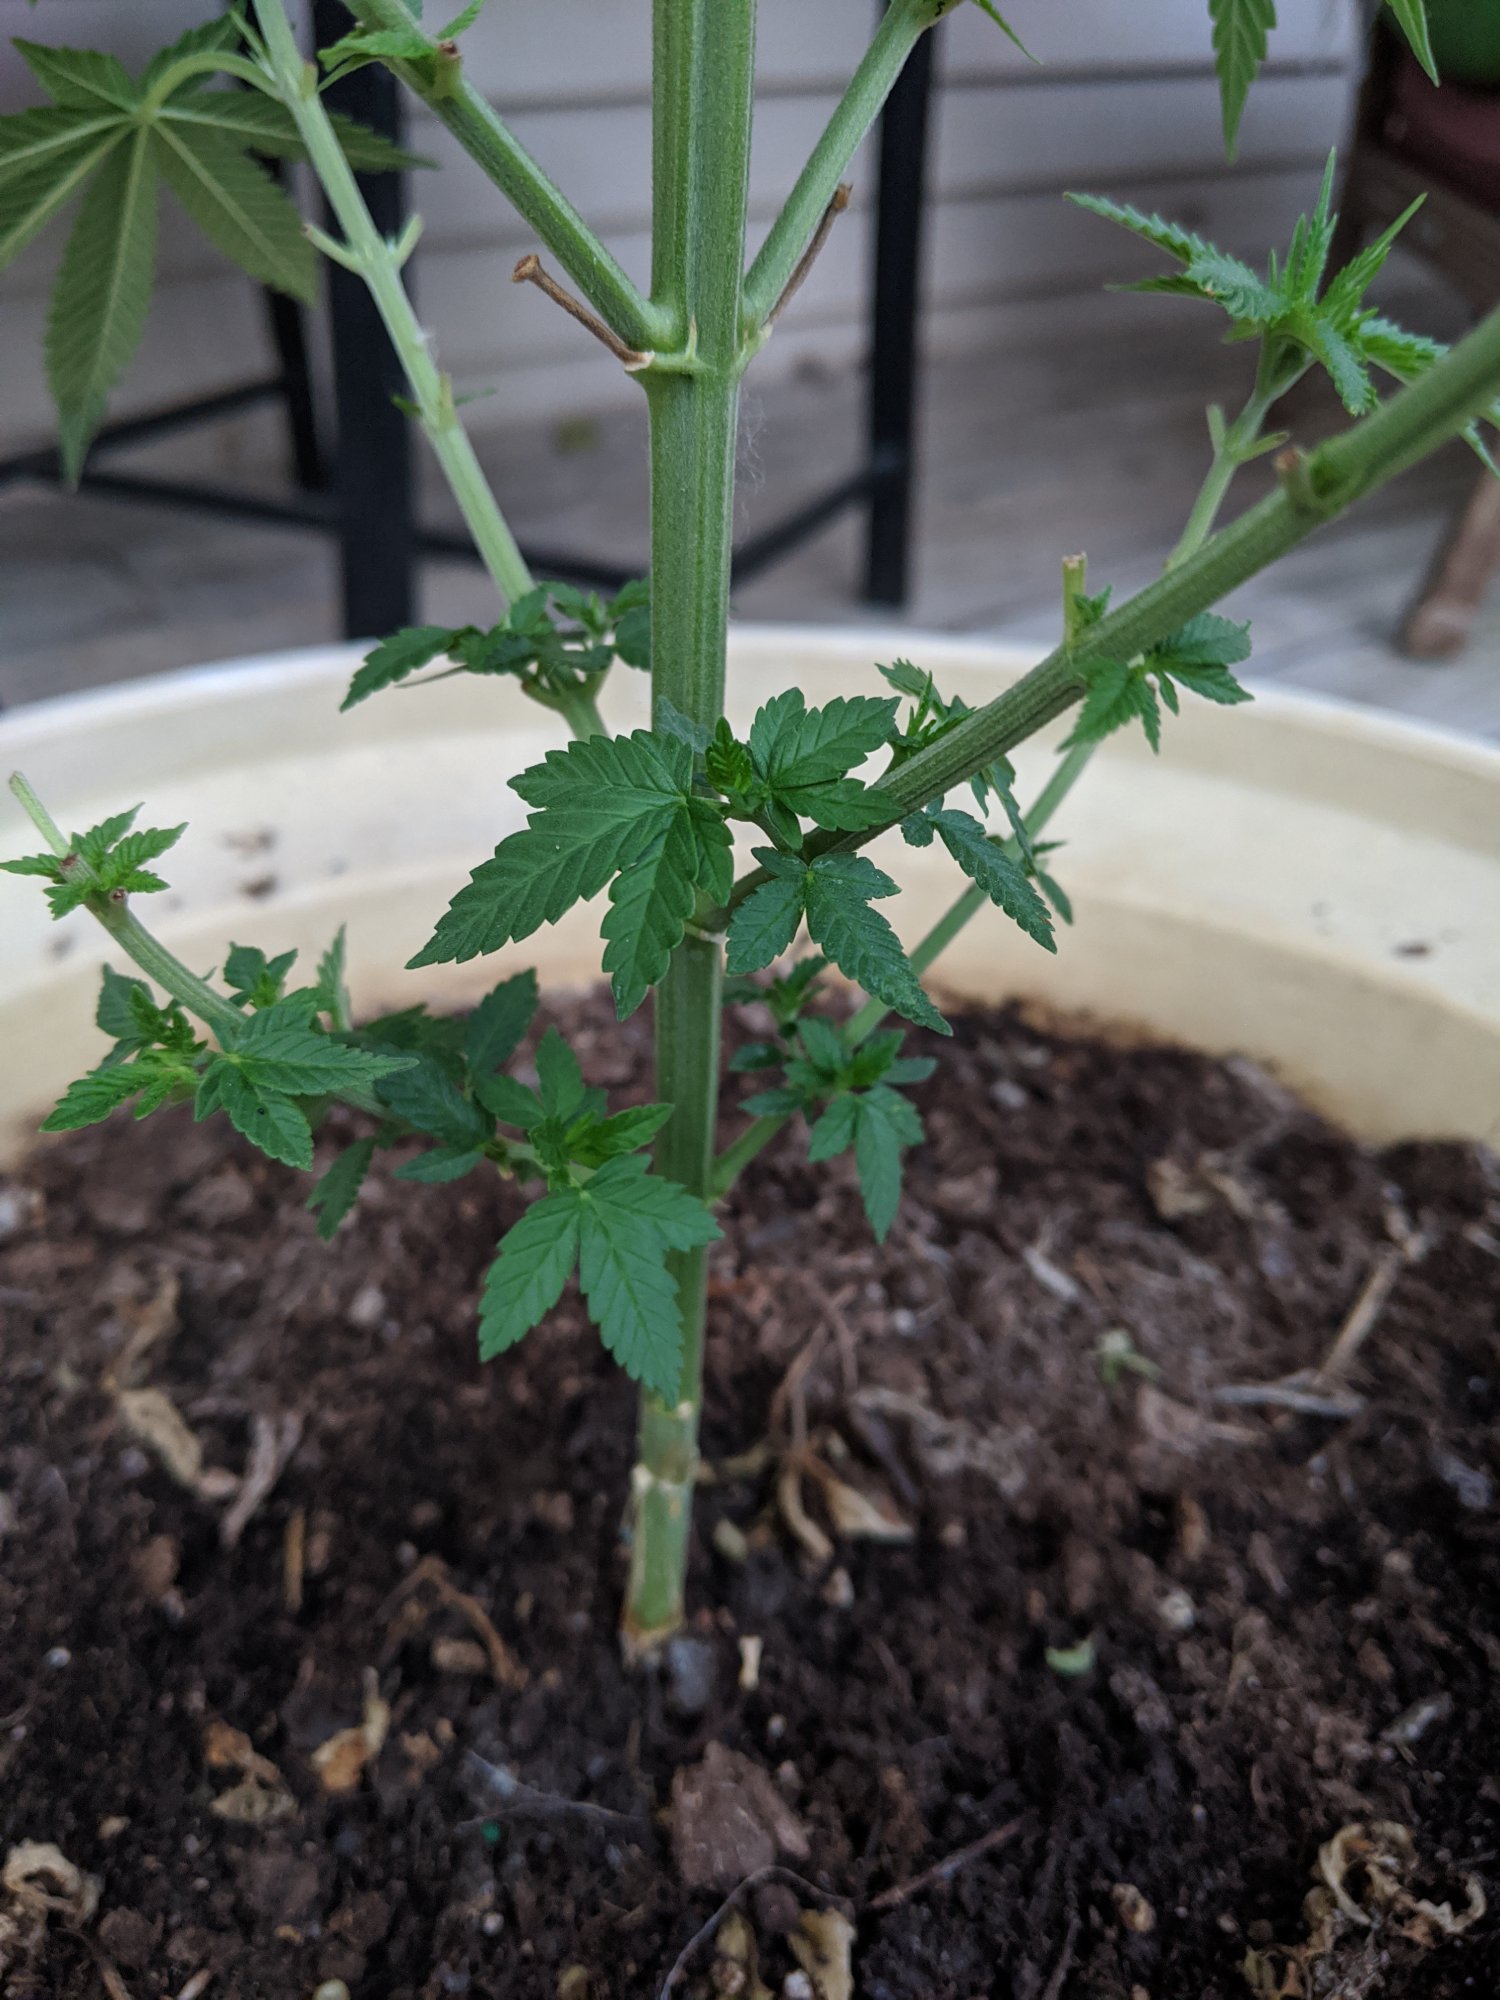 First time grower outdoor grow